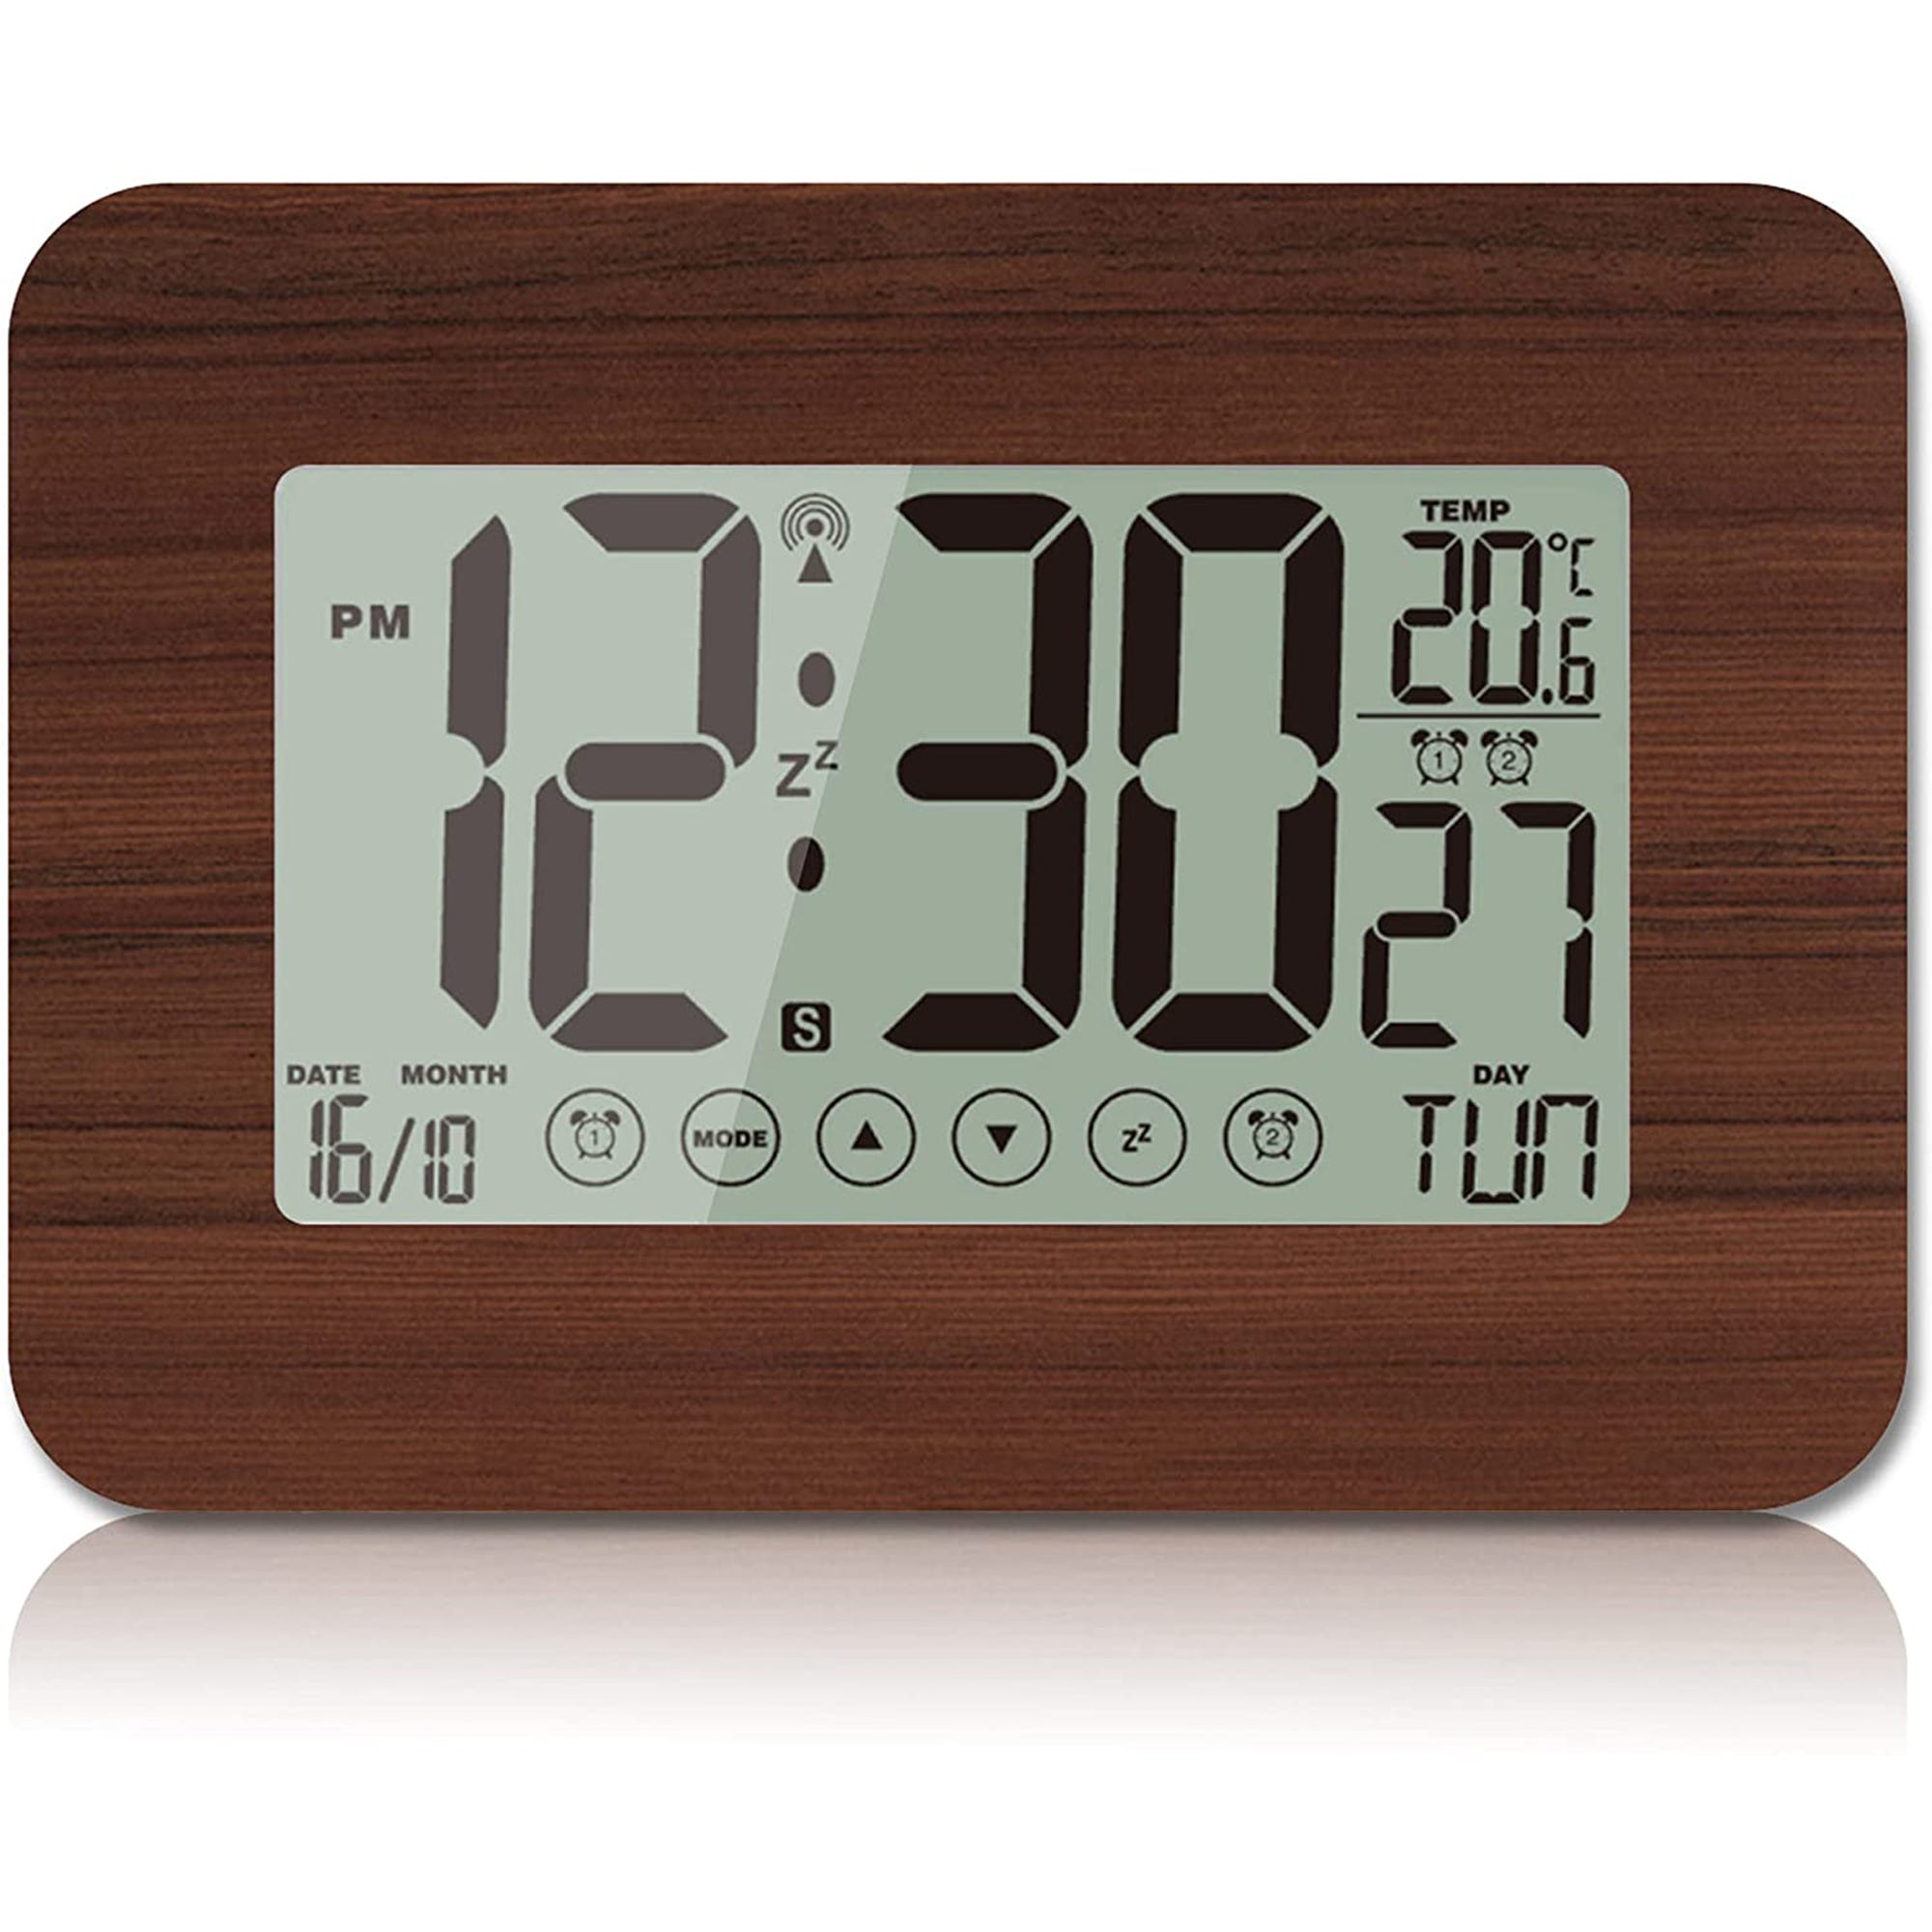 Horloge Digitale Tactile Radiopilotee - Temperature Ambiante